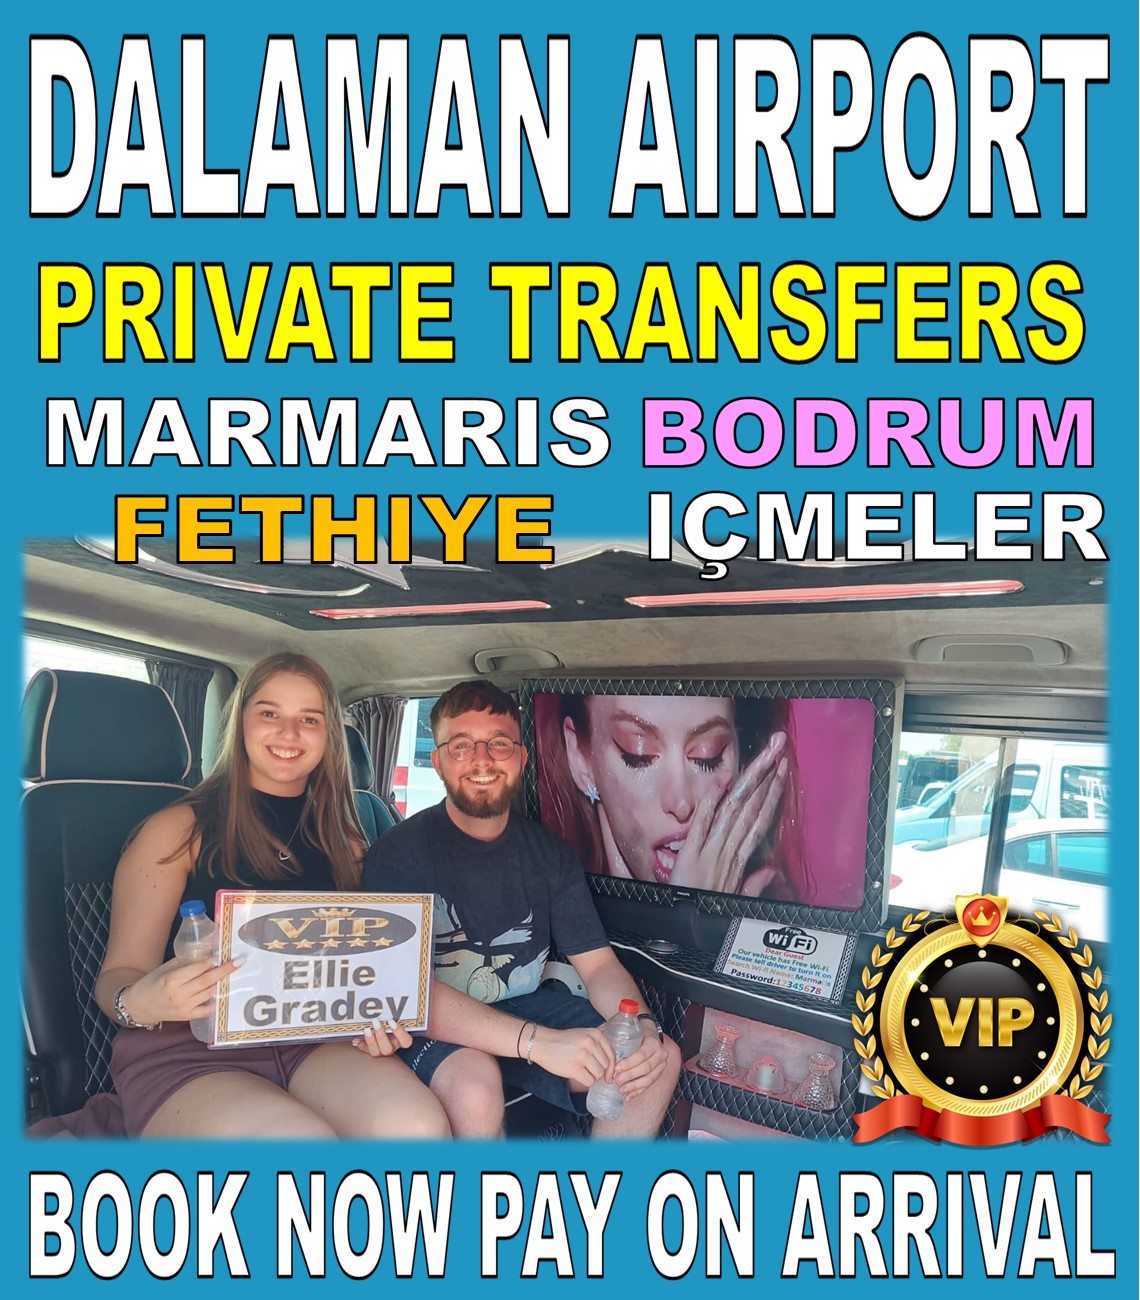 Dalaman Airport Transfers